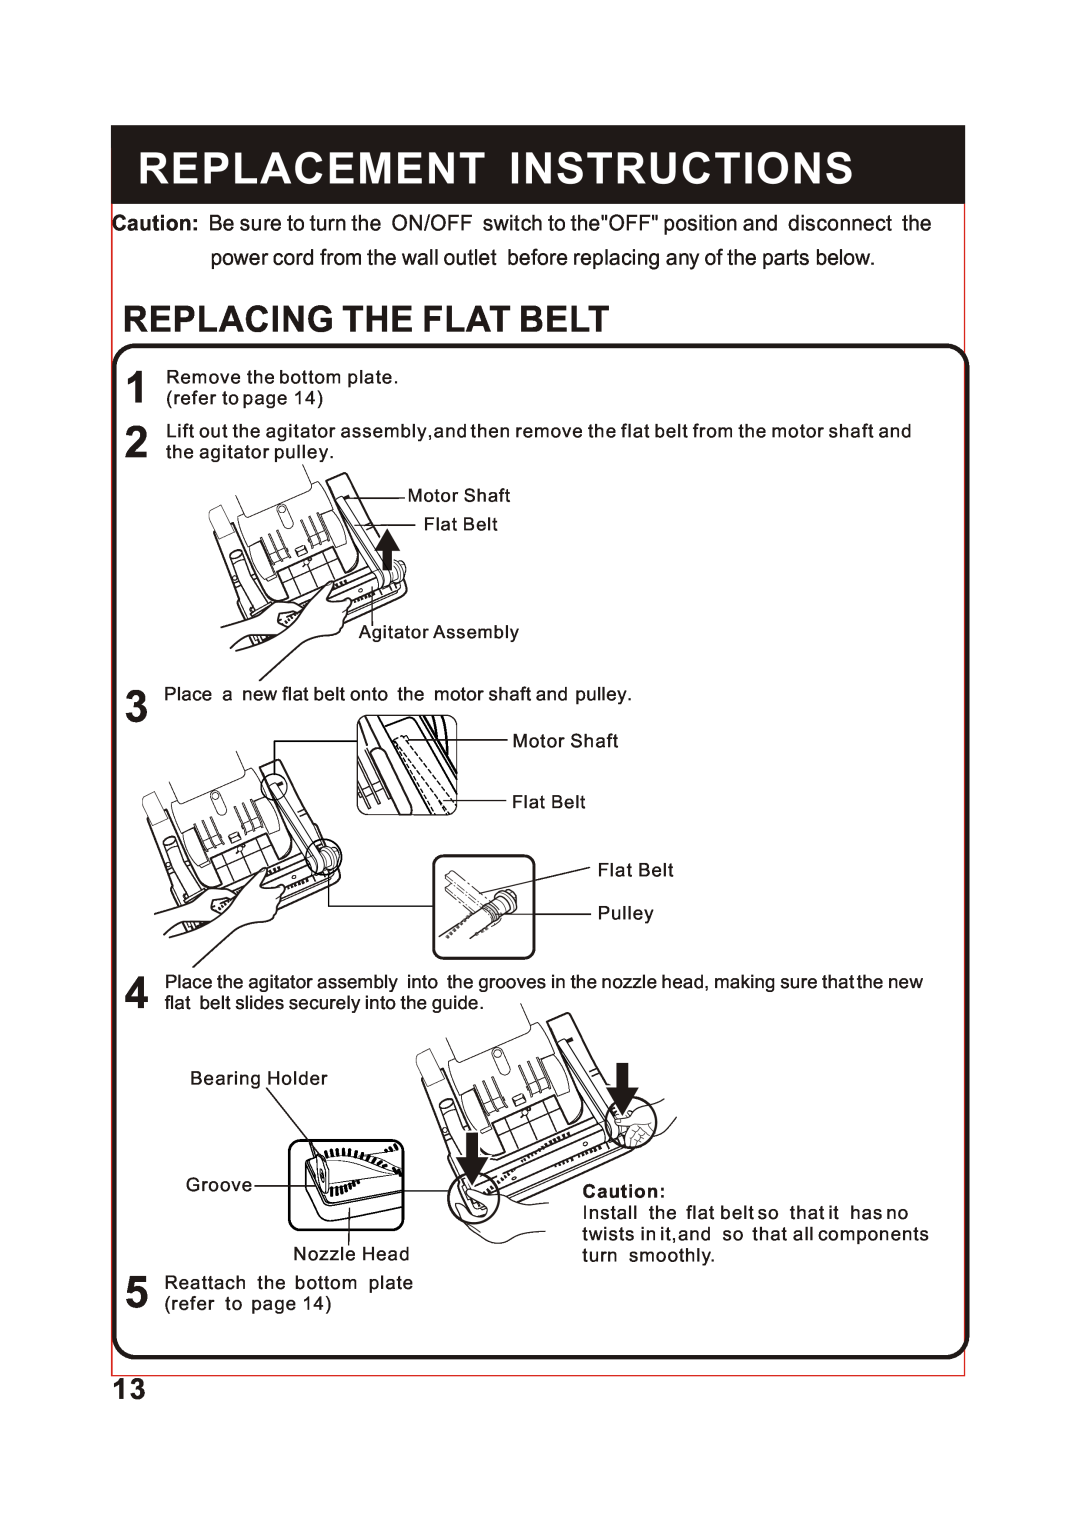 Fantom Vacuum FM741 instruction manual Replacing The Flat Belt, Replacement Instructions 